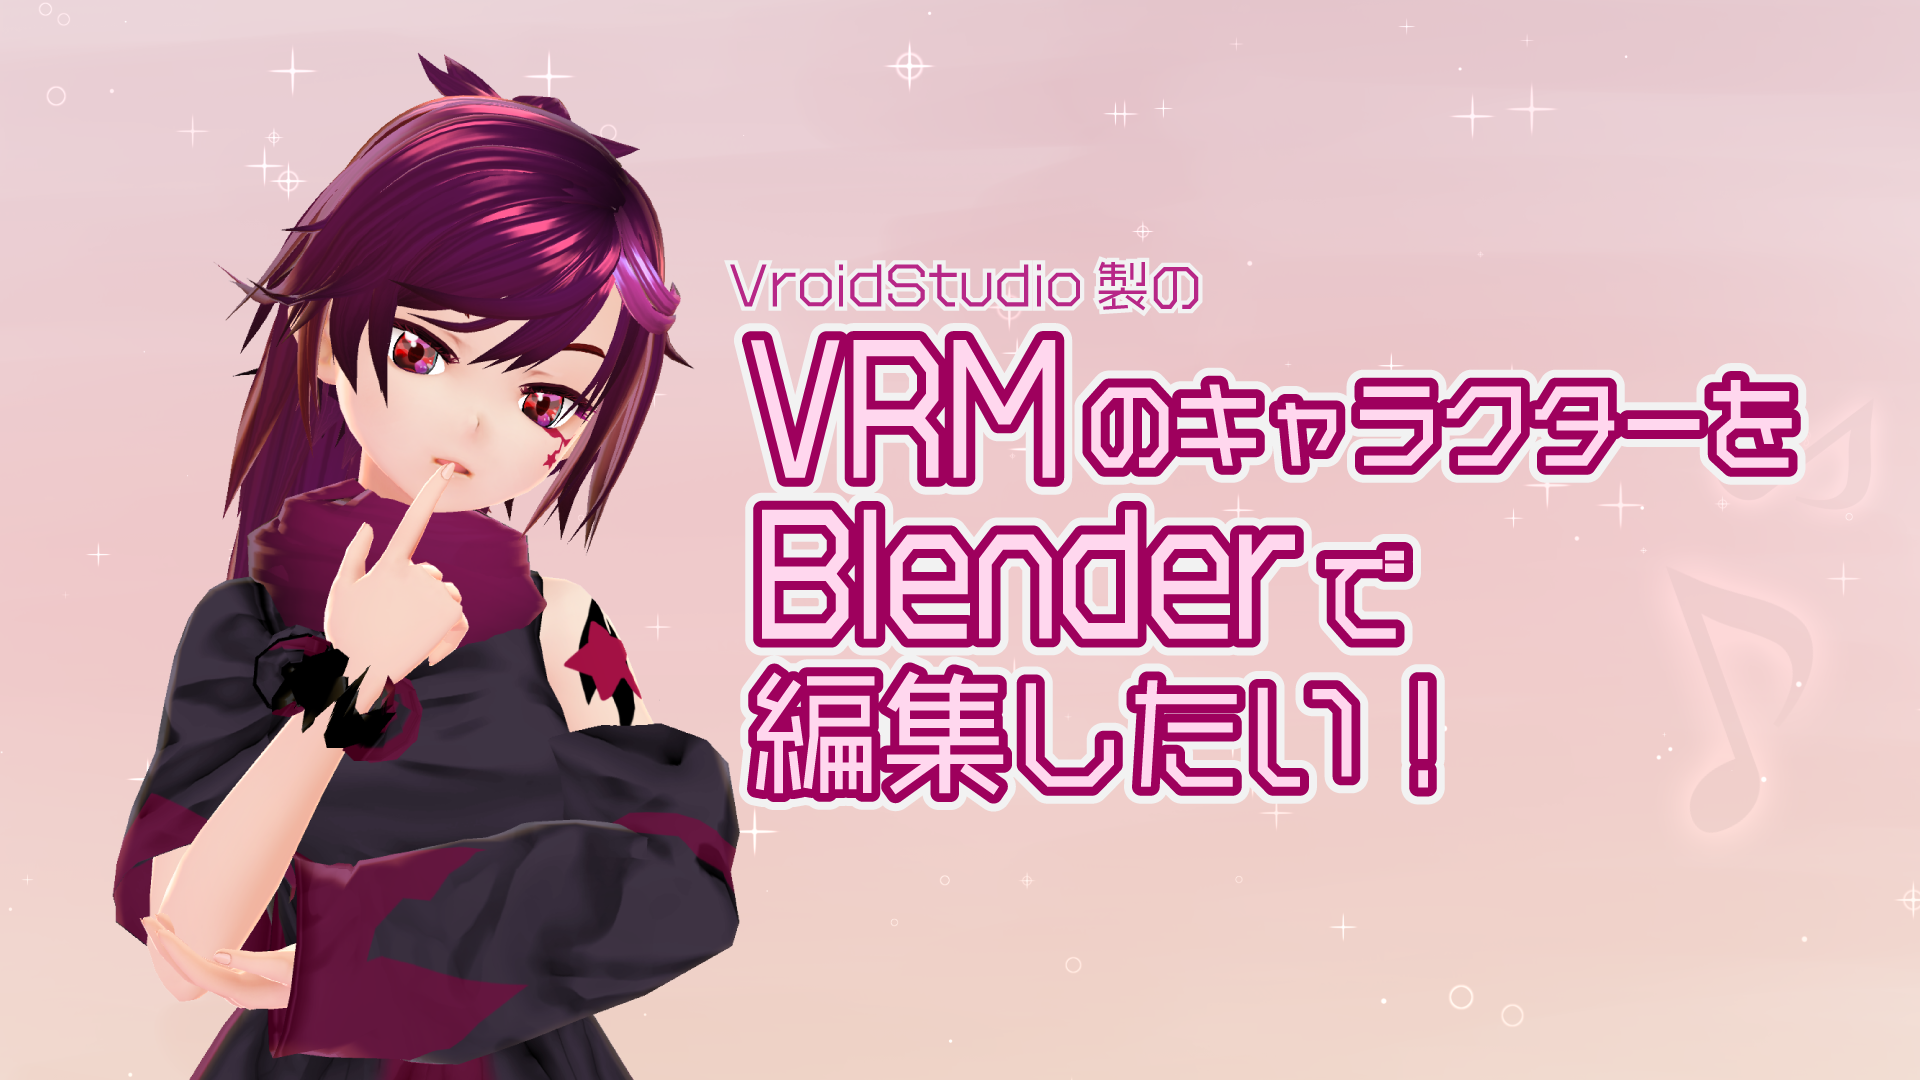 BlenderでVRMのキャラクターを作ろう！ | 電ch! – 大阪電気通信大学チャンネル